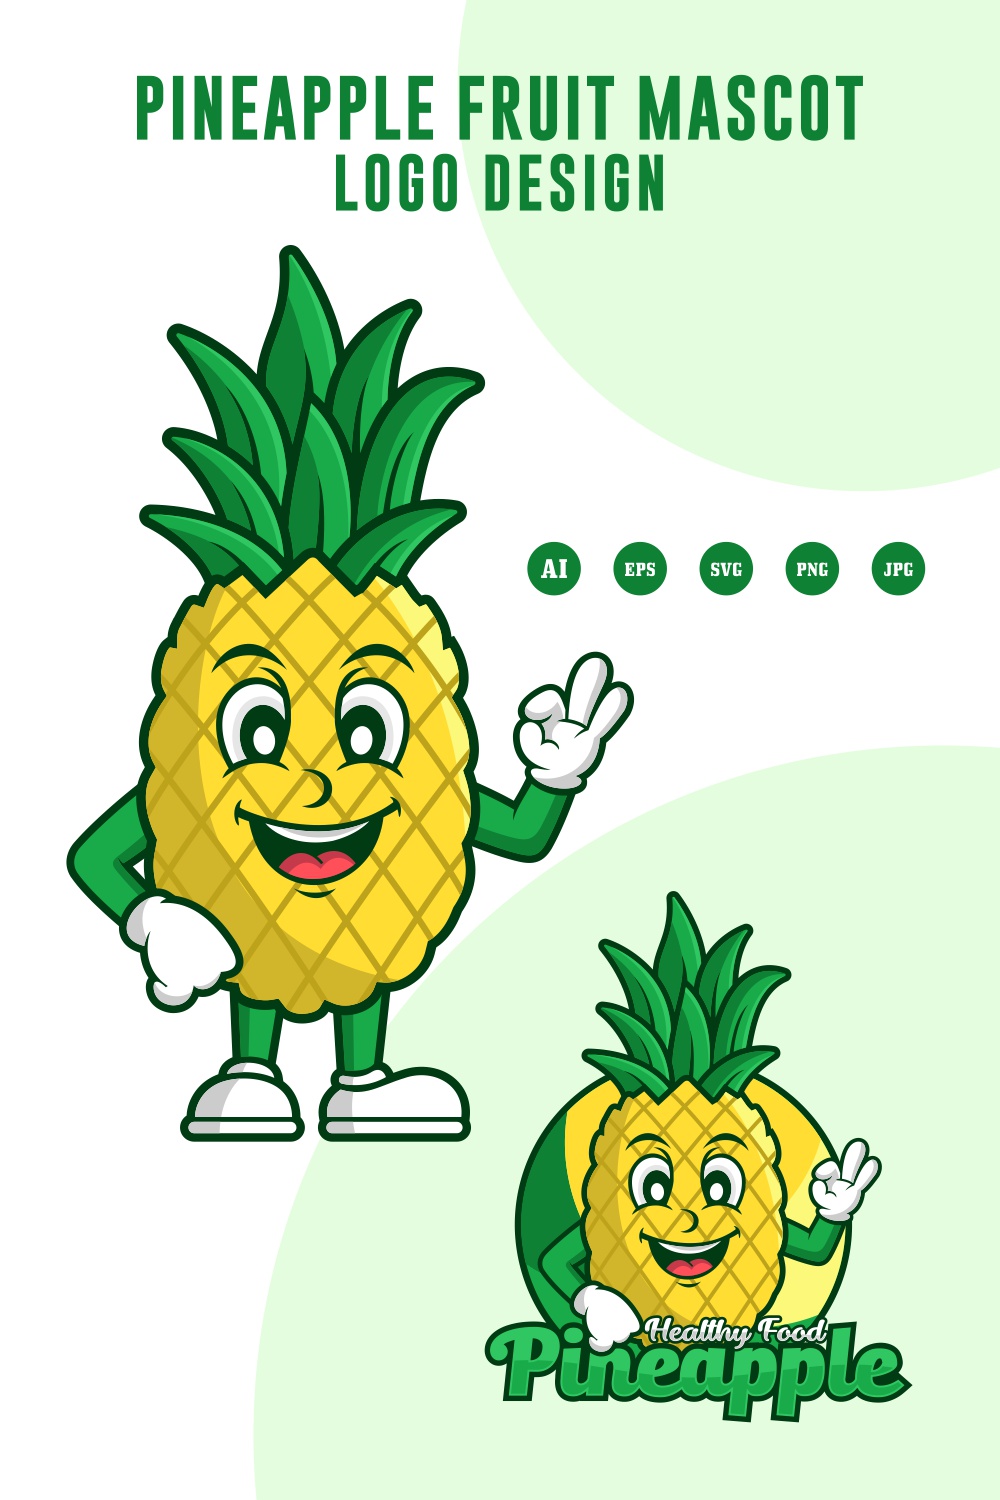 Set Pineapple fruit mascot cartoon logo design - $6 pinterest preview image.